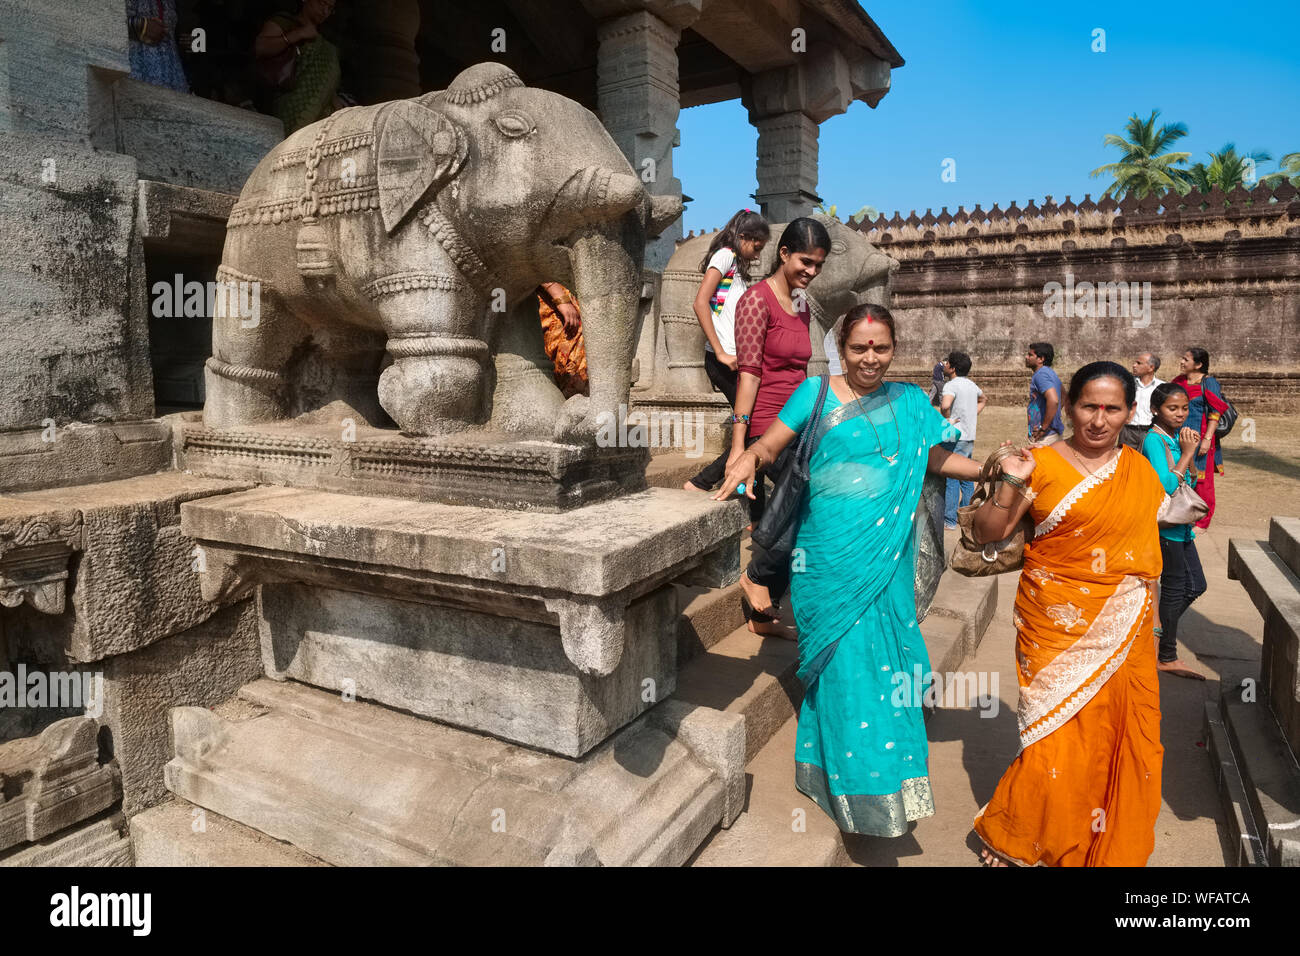 Visitors leaving the Thousand Pillar Temple (Saavira Kambada Basadi), a Jain temple in Moodabidri, Karnataka, India, passing elephant stone figures Stock Photo